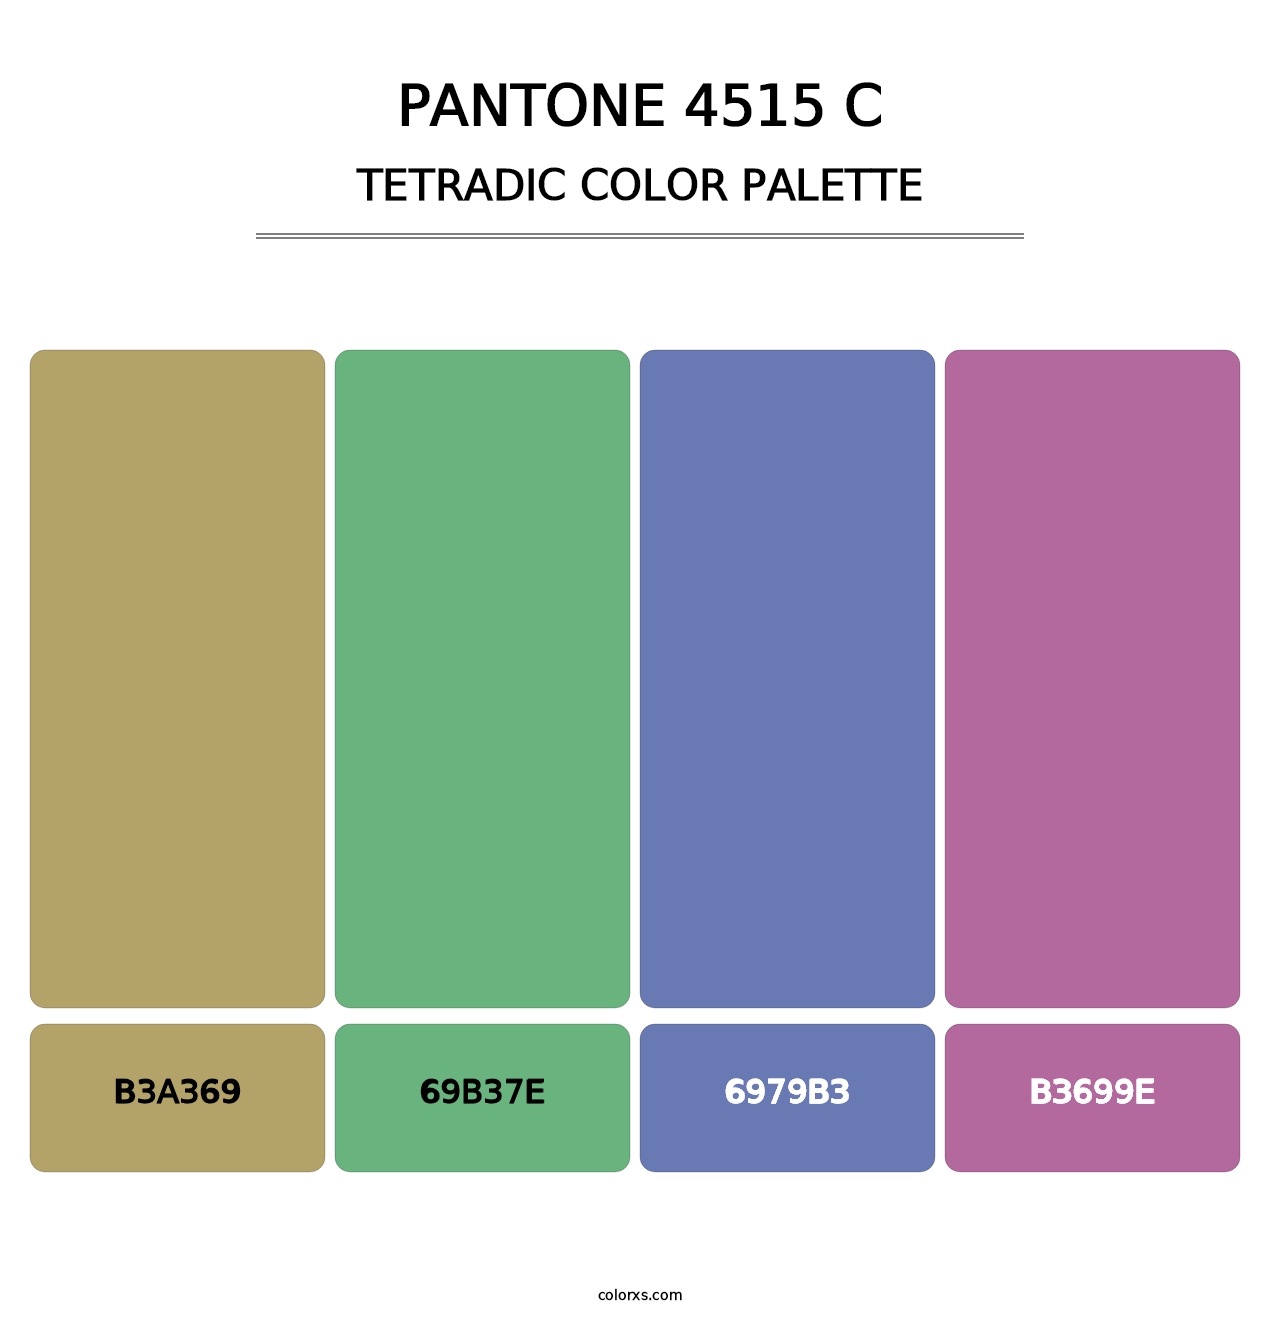 PANTONE 4515 C - Tetradic Color Palette